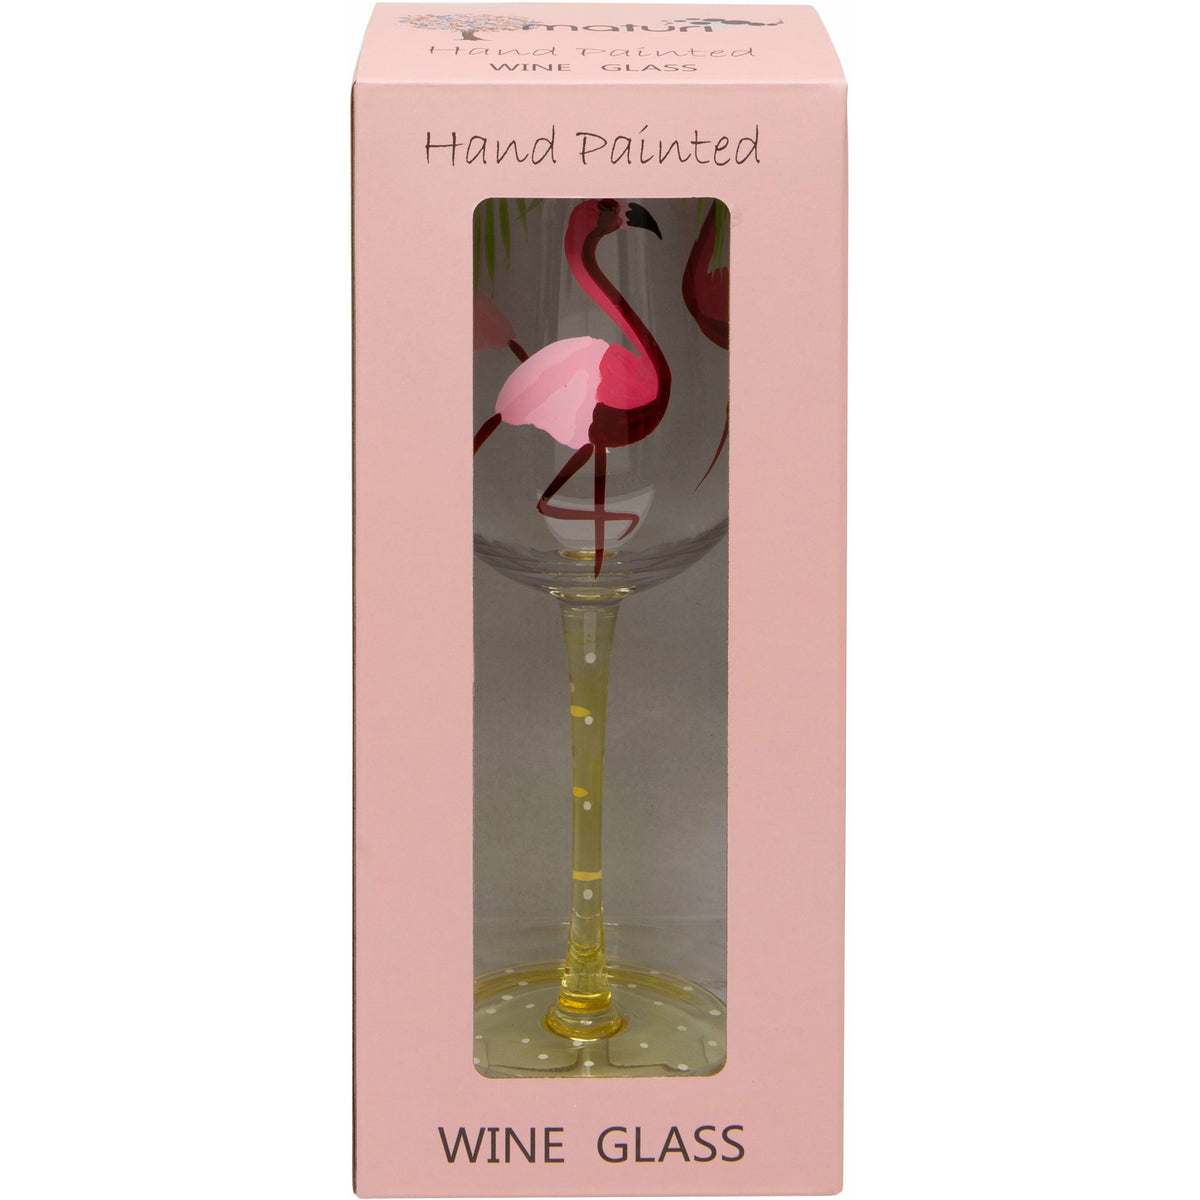 Hand Painted Flamingo Wine Glass in Box